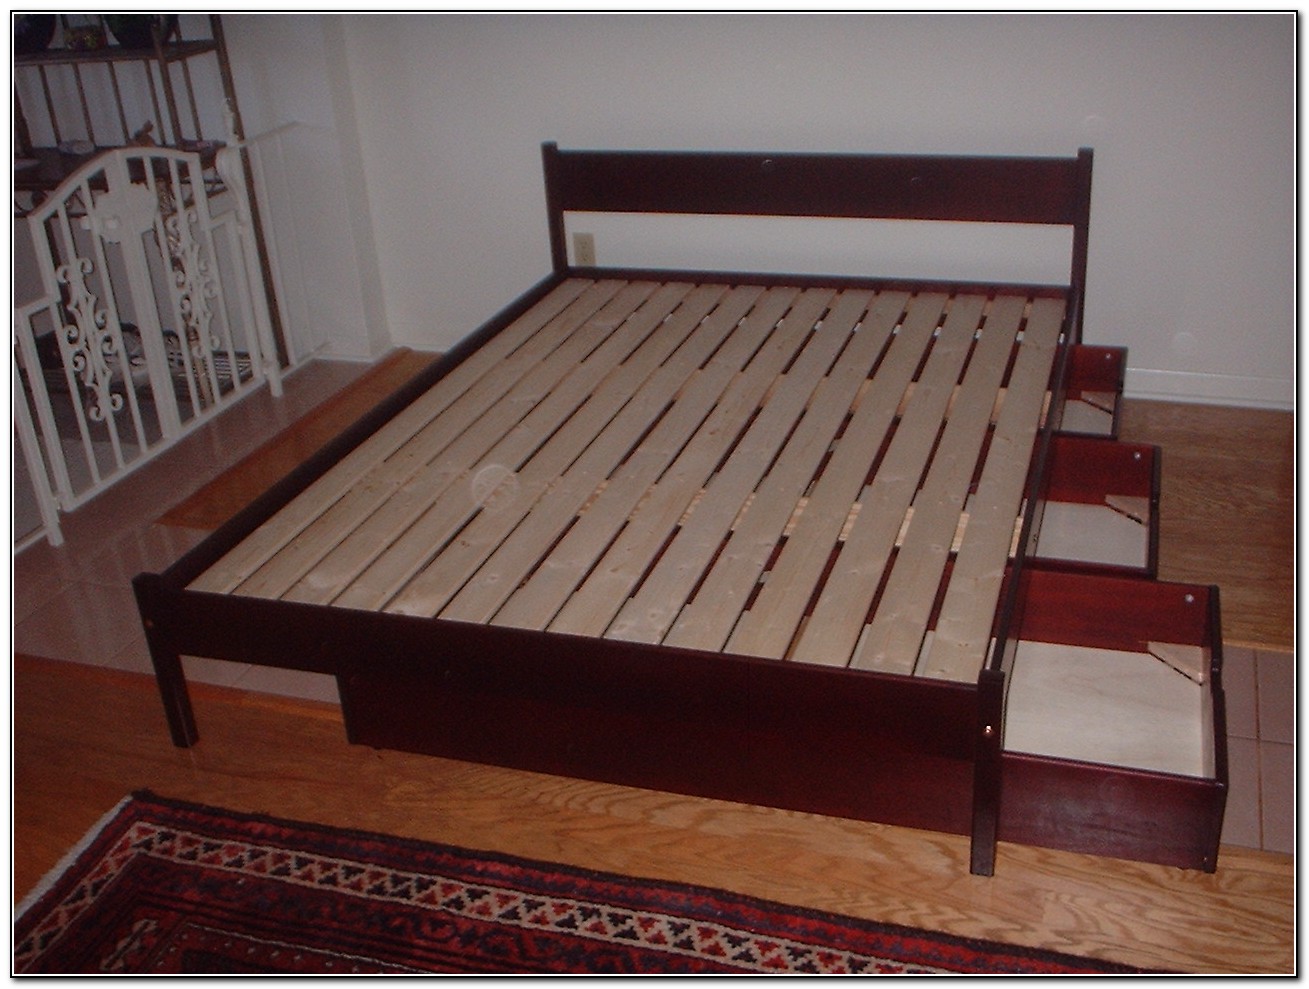 Platform Bed With Storage Drawers Underneath